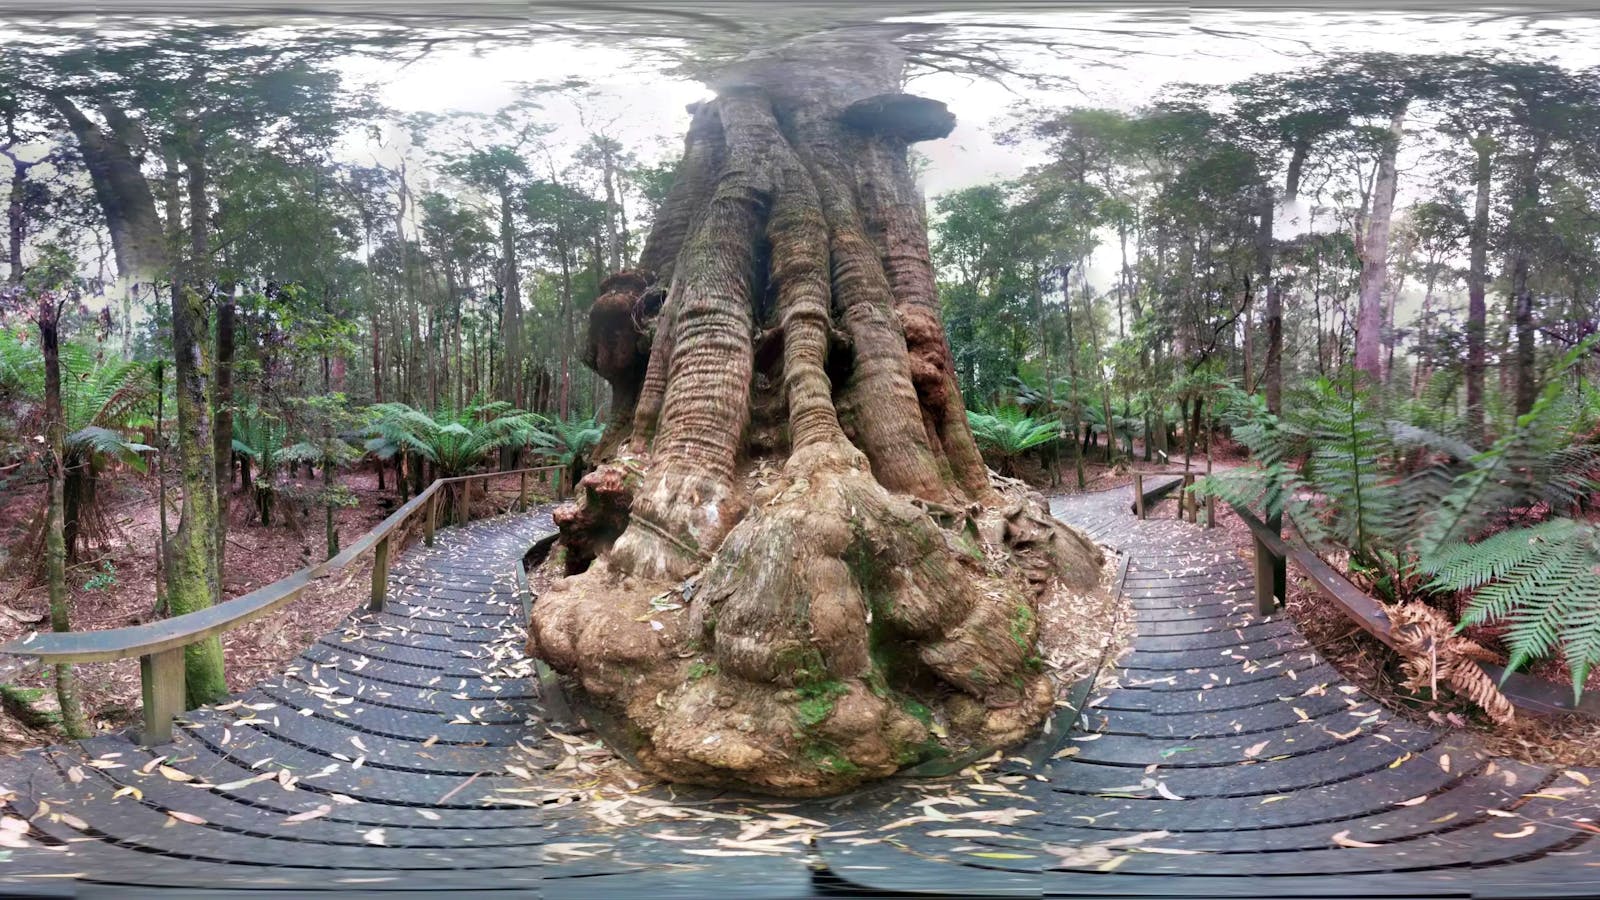 A giant Eucalyptus tree with a bulging base